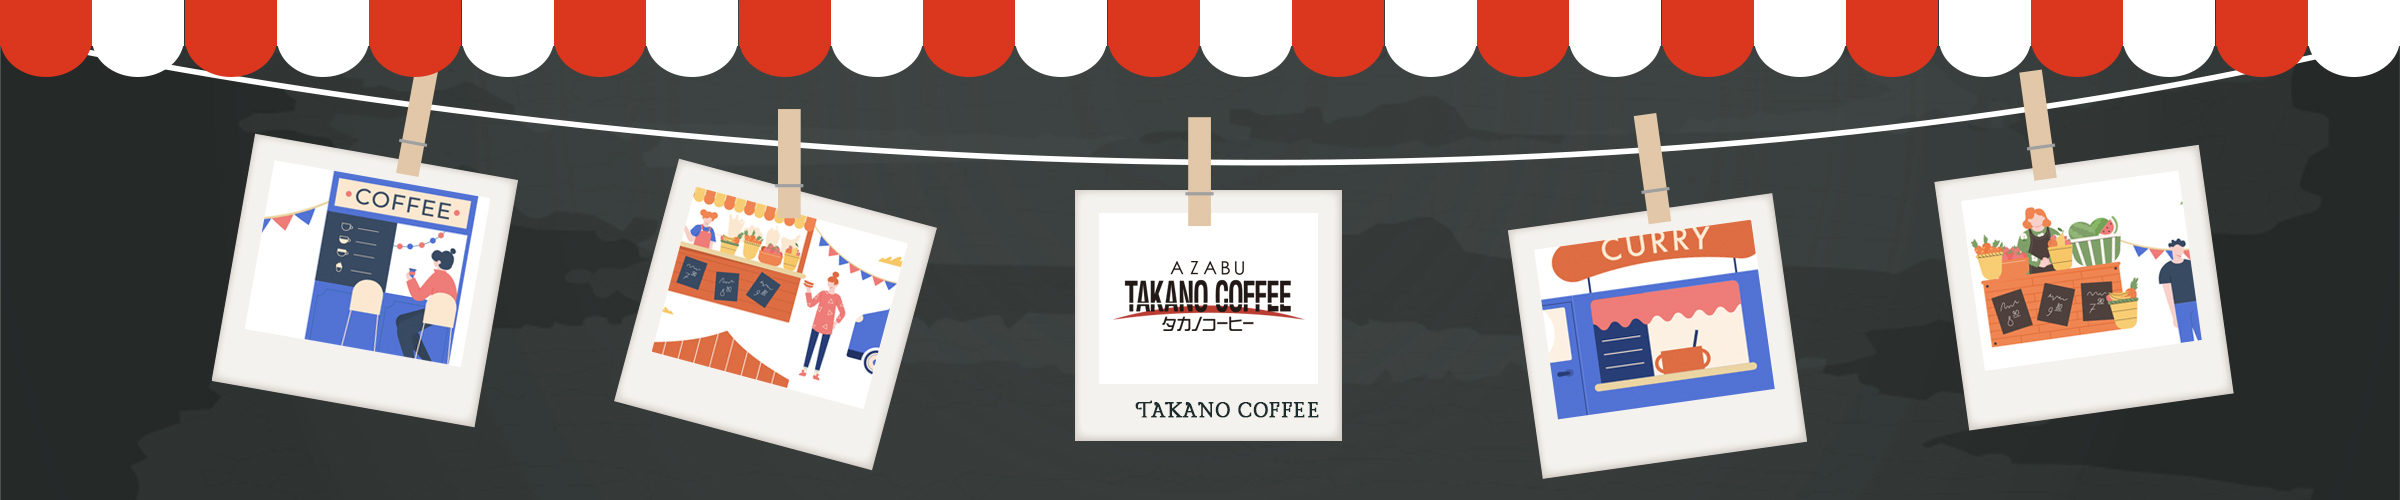 responsive1_slider_takanocoffee.jpg